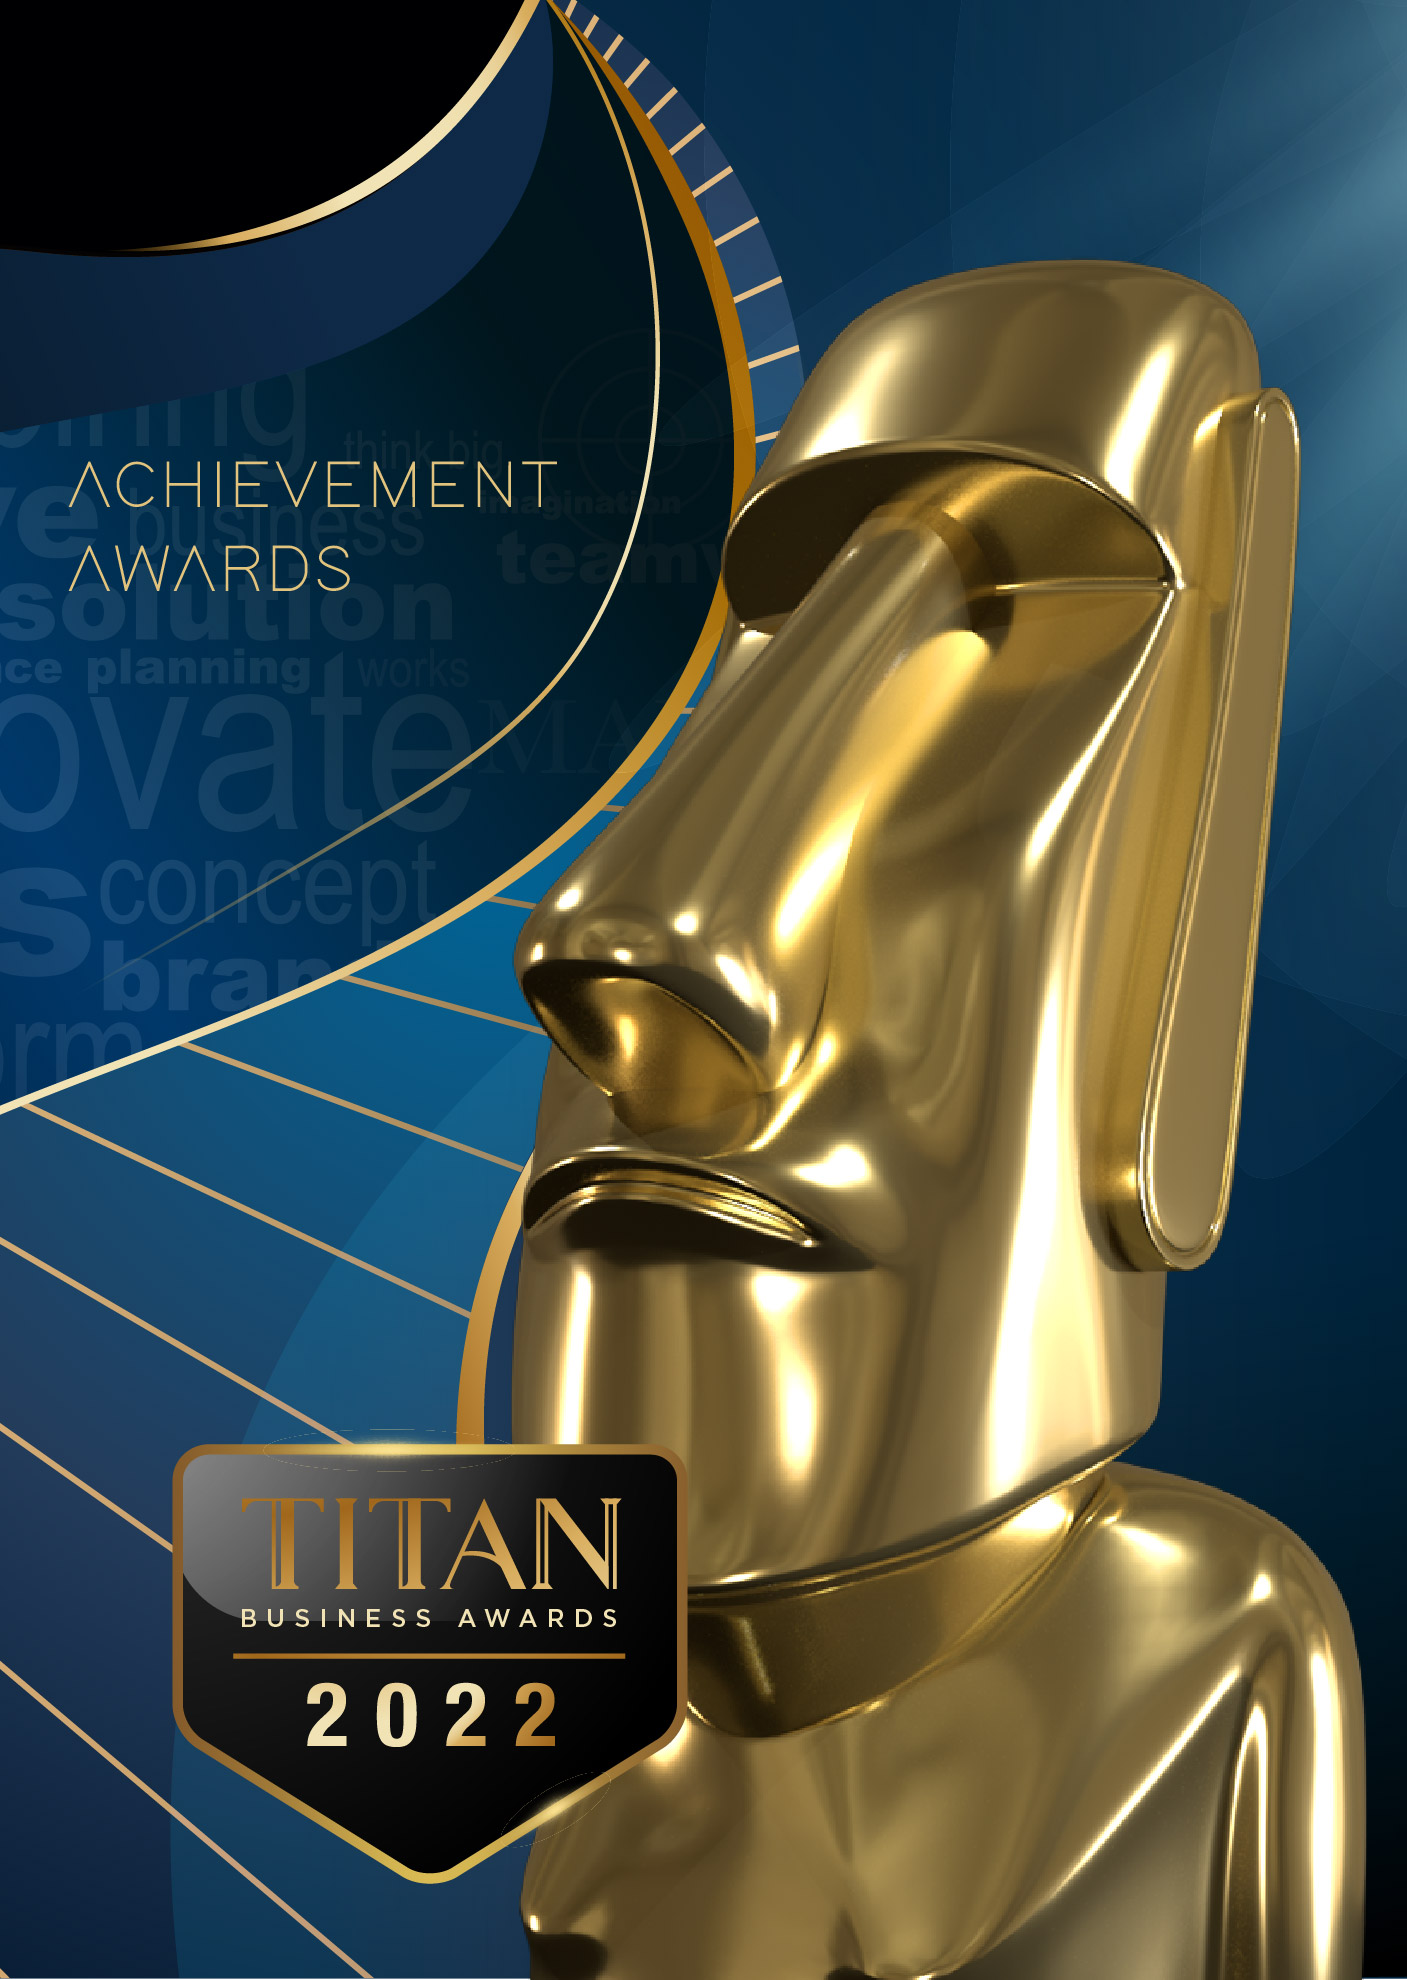 TITAN Achievement Awards | International Business Awards